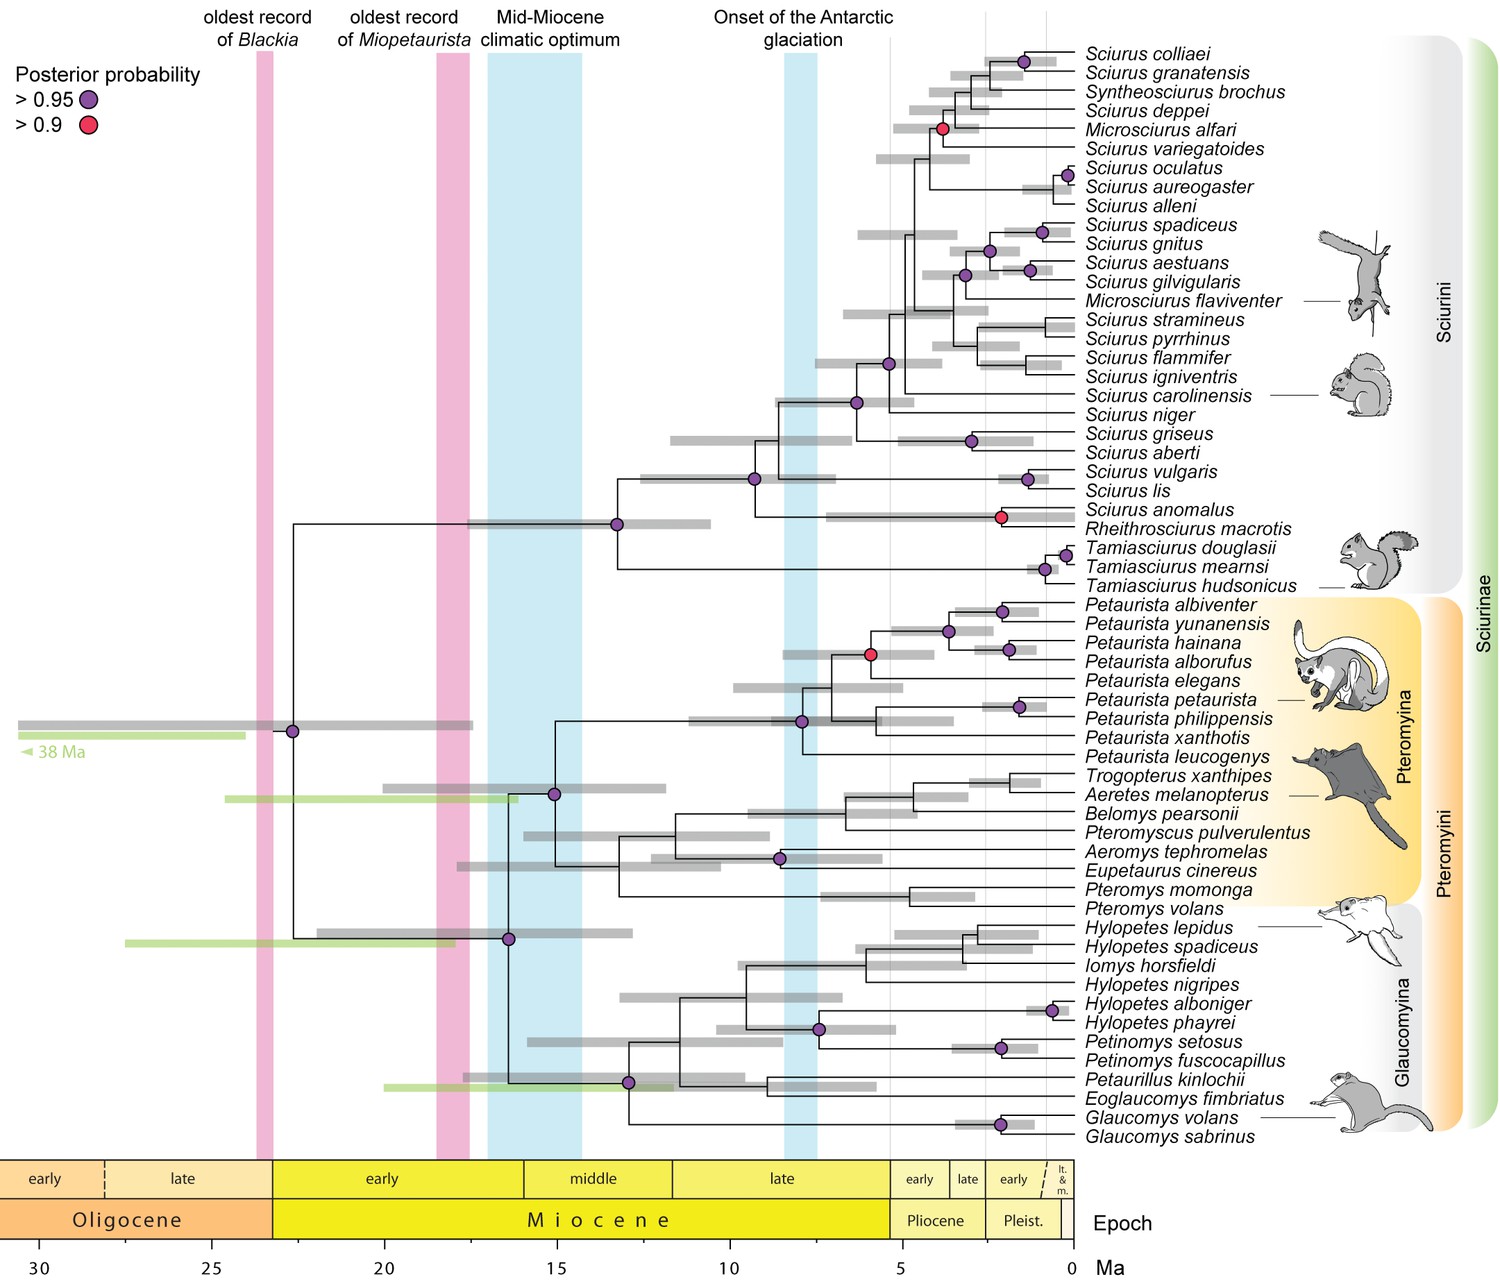 Sciurinae phylogeny and node dating estimates using BEAST